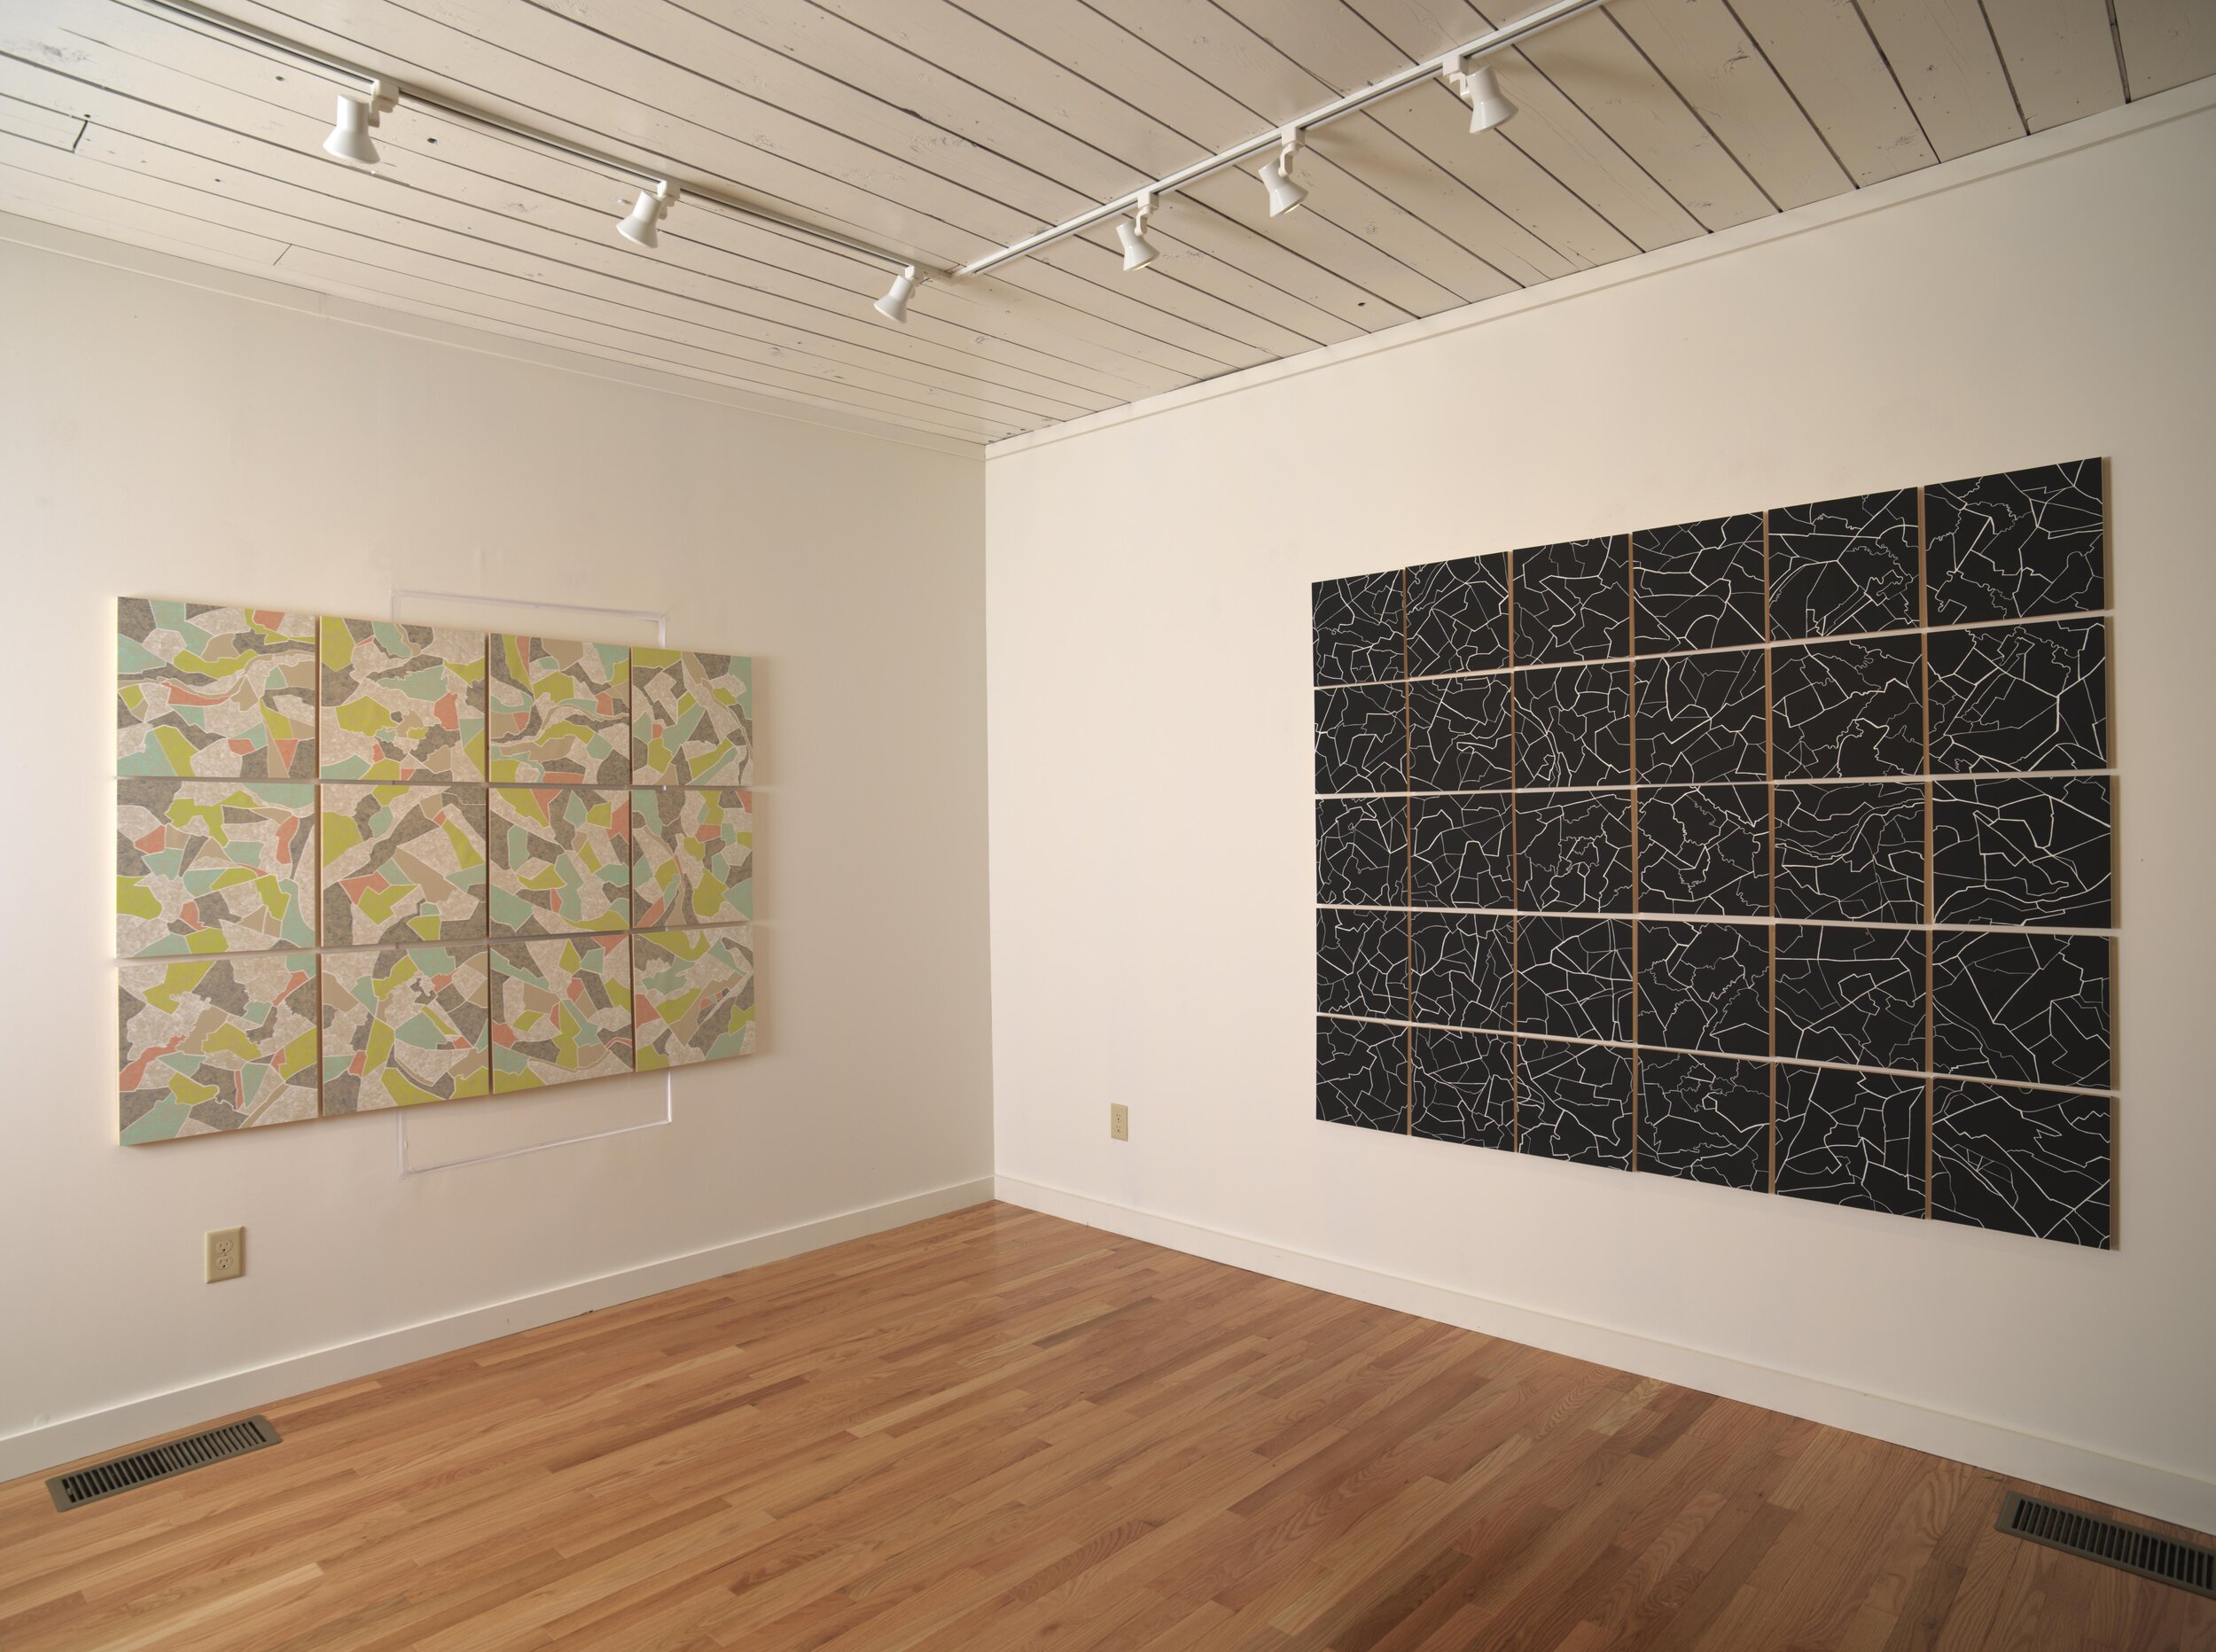    Grids Exhibiton, 2015   Cynthia Reeves Gallery, WaIpol, New Hampshire       